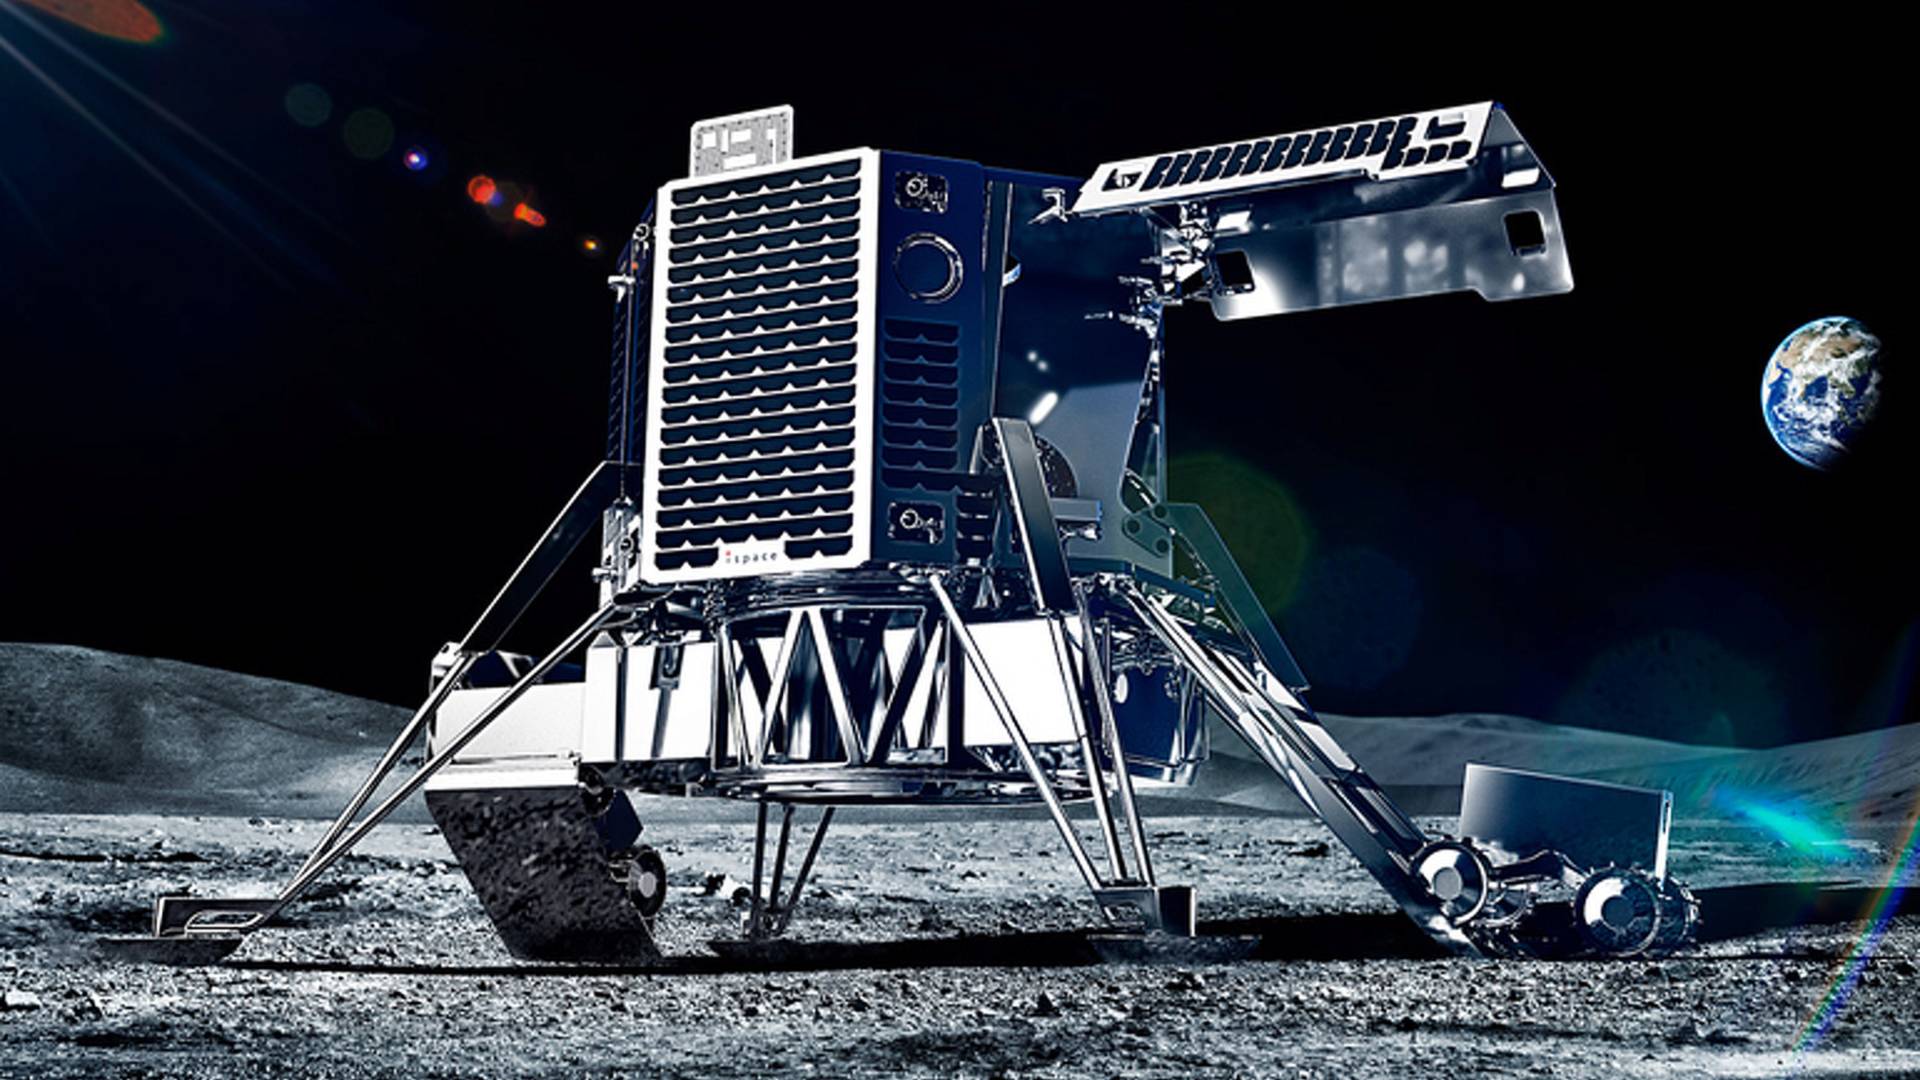 suzuki-goes-to-space-bike-giant-to-fund-lunar-exploration.jpg